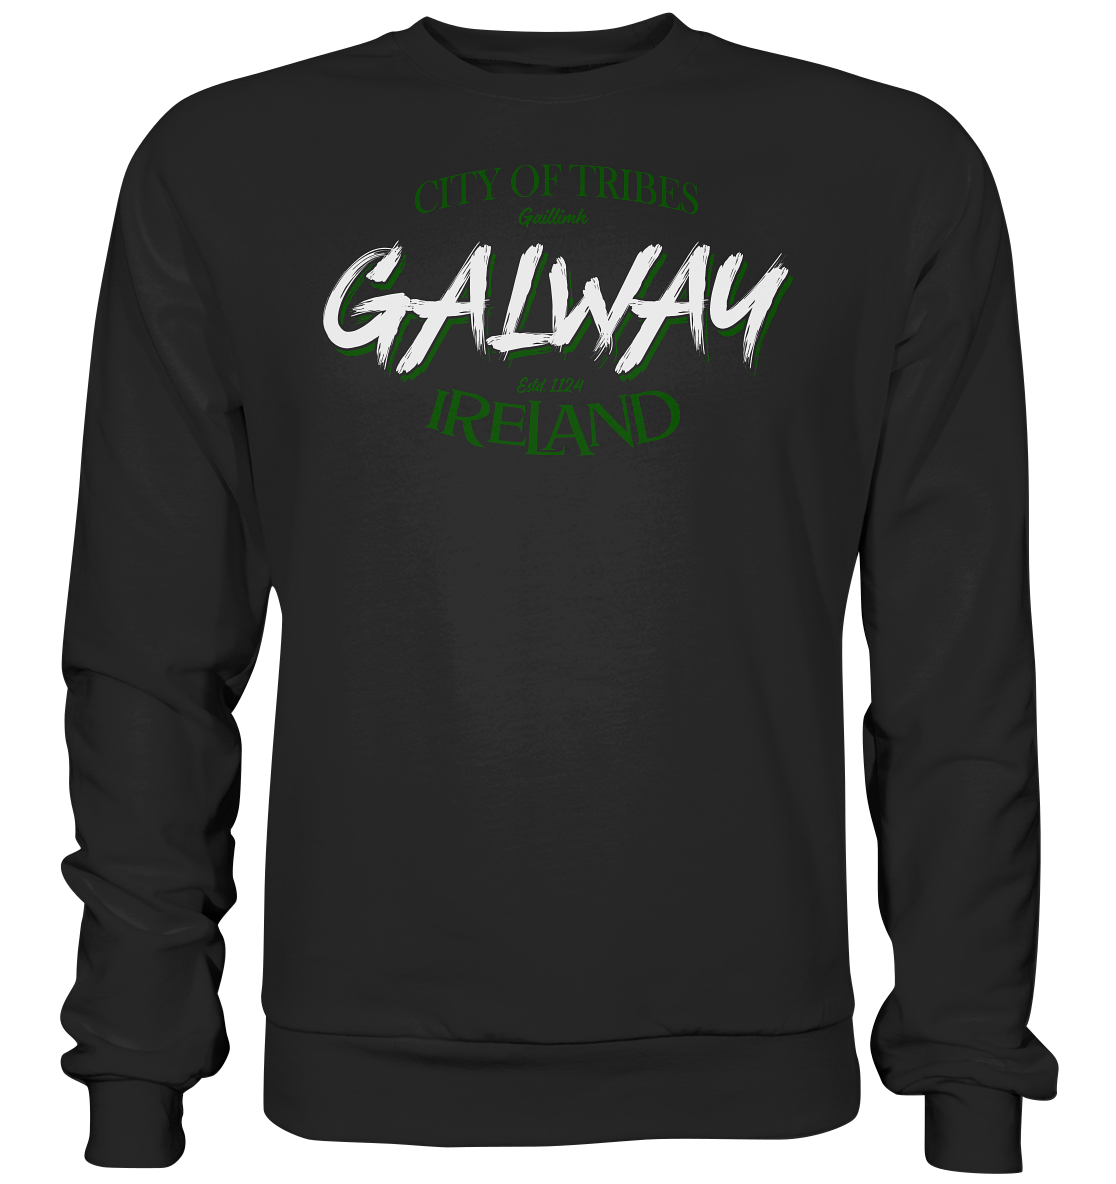 Galway "City Of Tribes" - Premium Sweatshirt